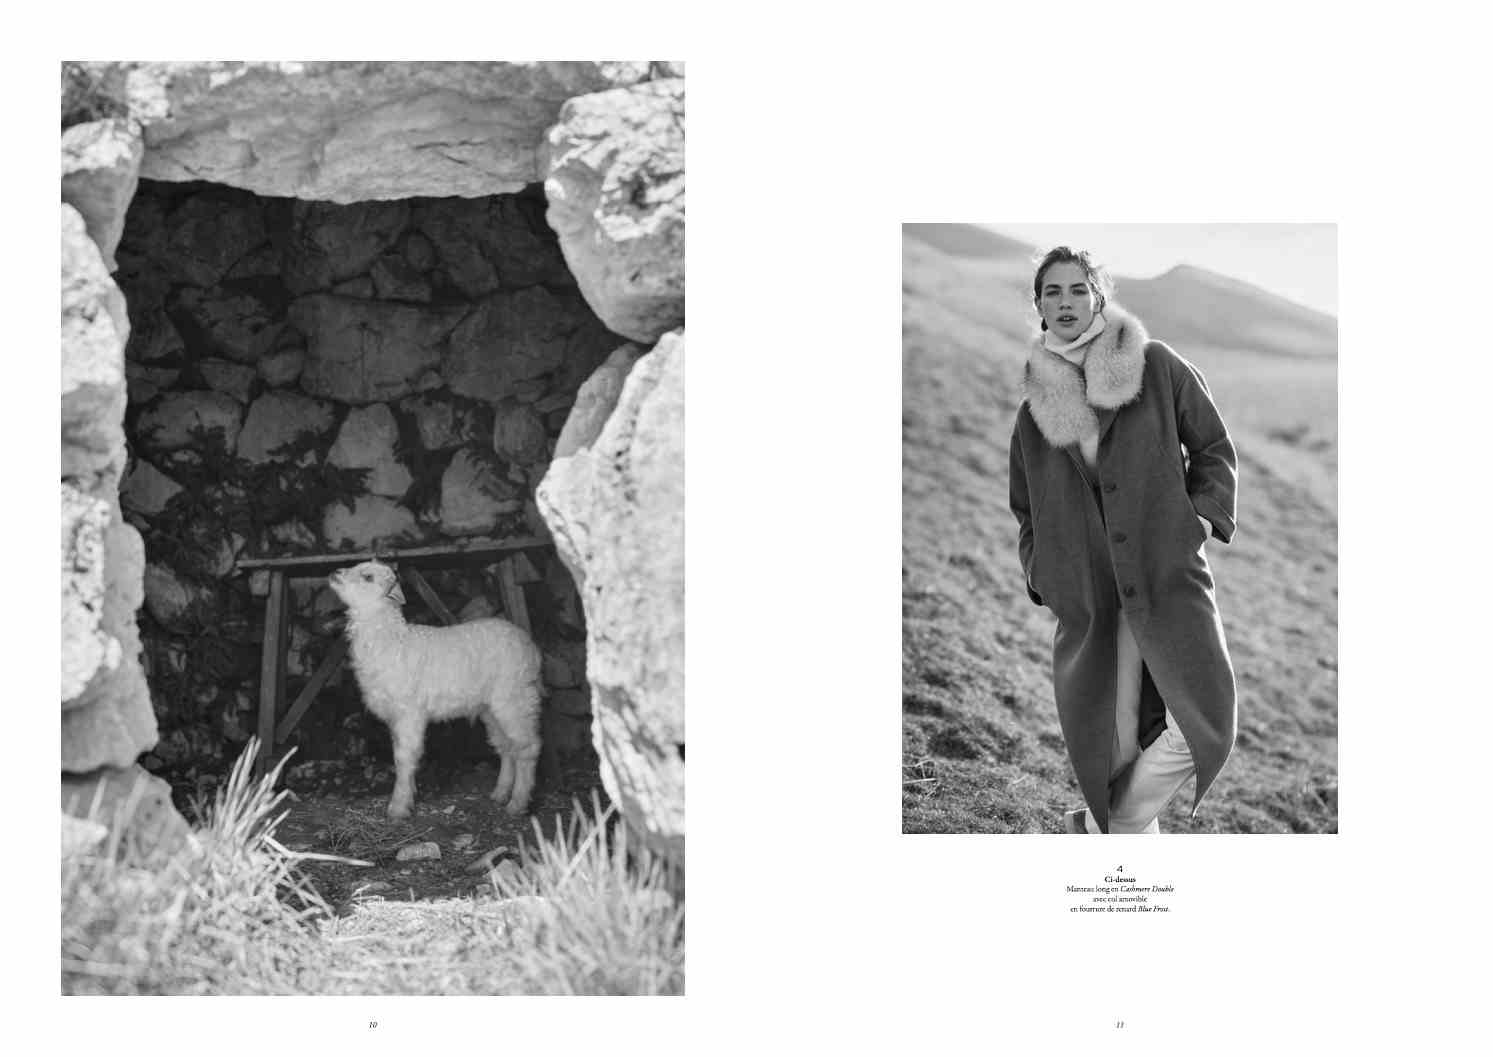 LORO PIANA - Fall Winter 16/17
Photographer: Boo George
Model: Crista Cober, Robertas Aukstuolis
Stylist: Beat Bollinger
Location: Gran Sasso, Abruzzo, Italy